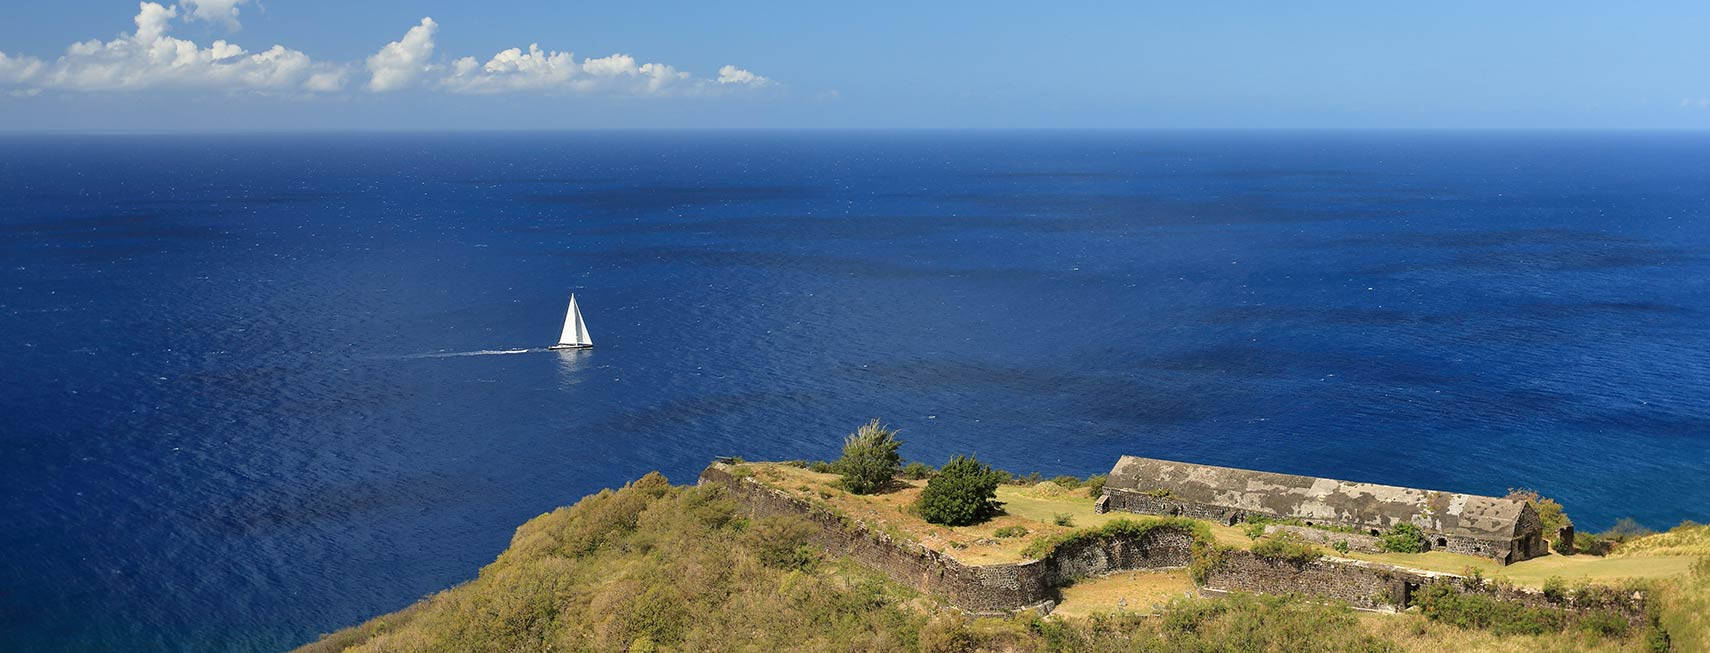 St Kitts And Nevis Cliff Edge Wallpaper